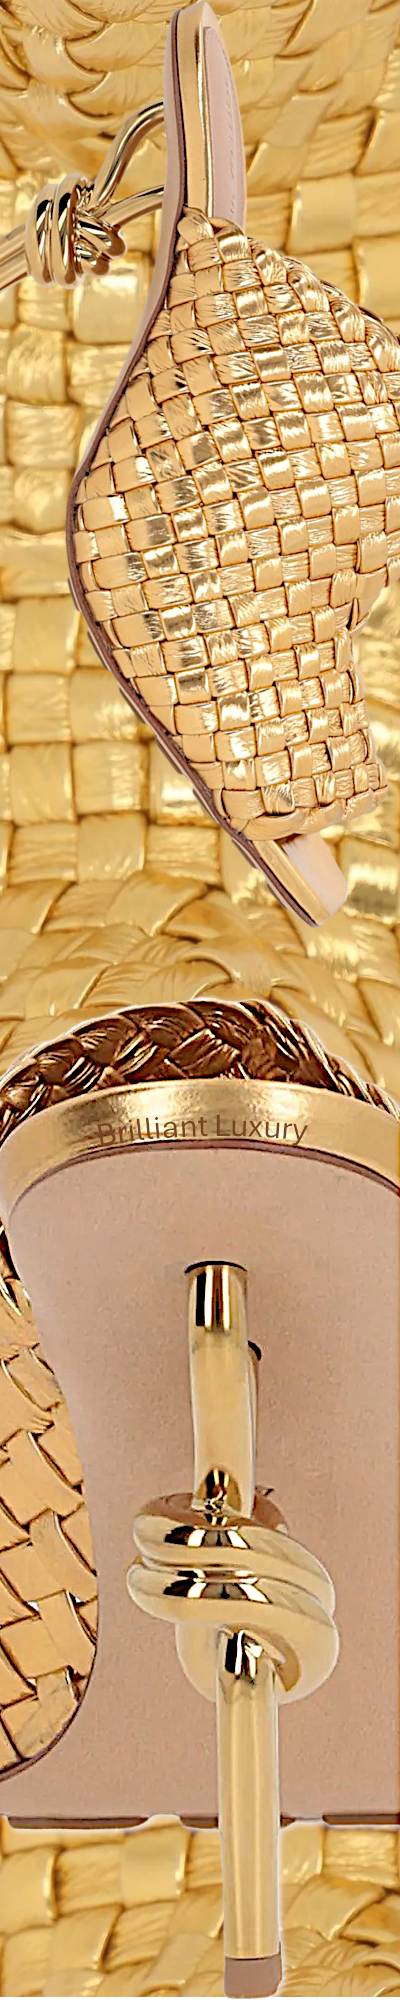 ♦Bottega Veneta Intrecciato gold metallic leather heels #shoes #brilliantluxury